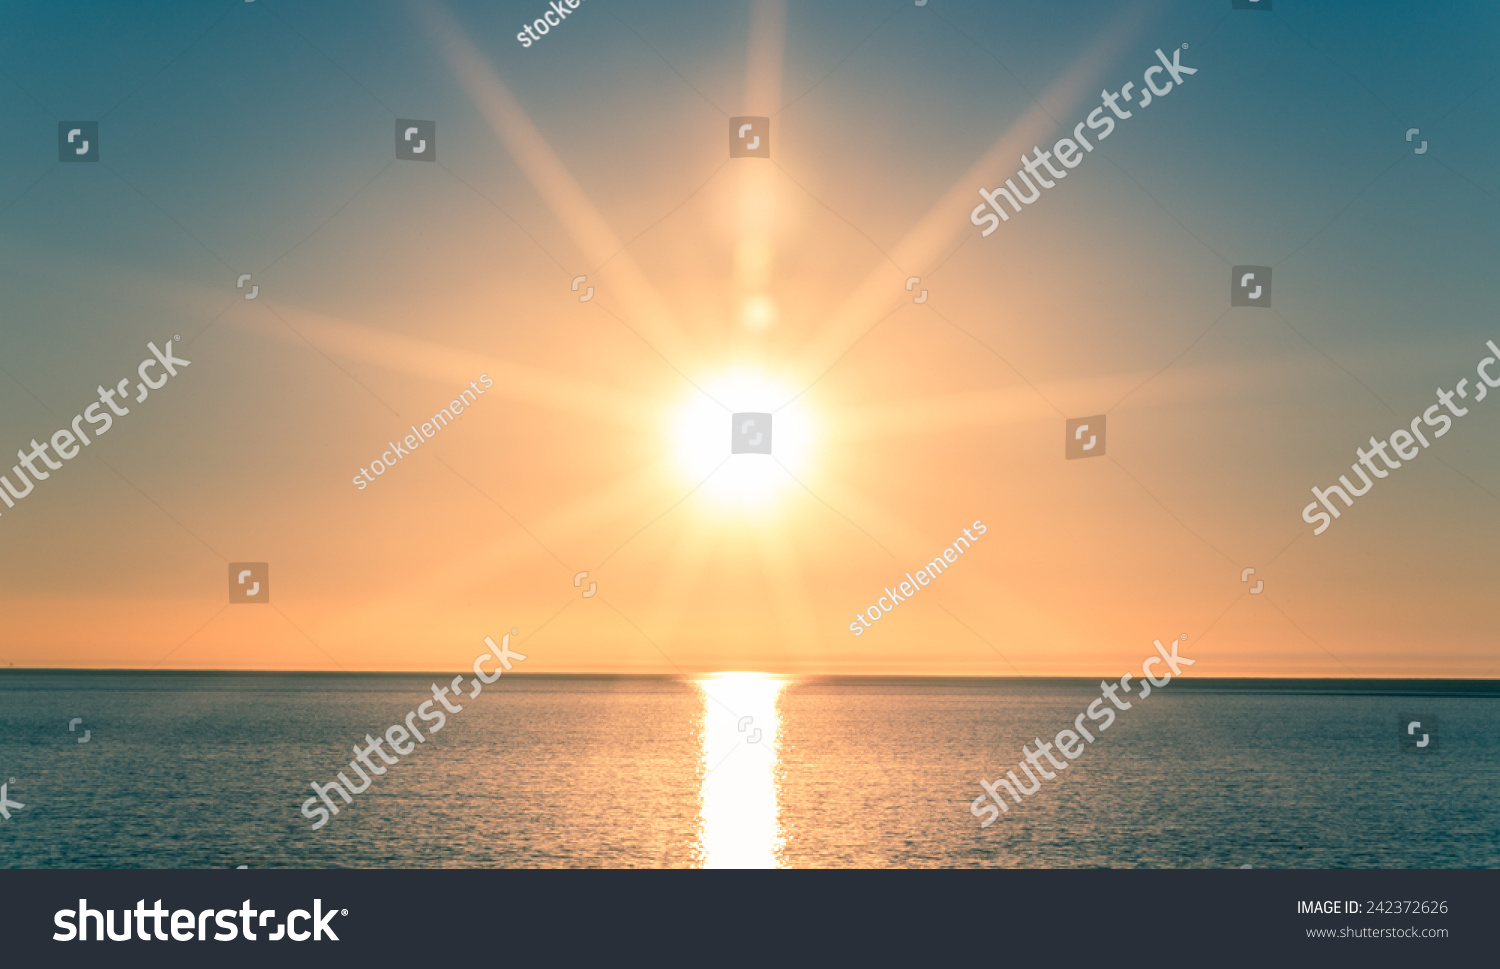 Sunset over Ocean - Bright Orange Sun Setting on Beautiful Blue Water #242372626